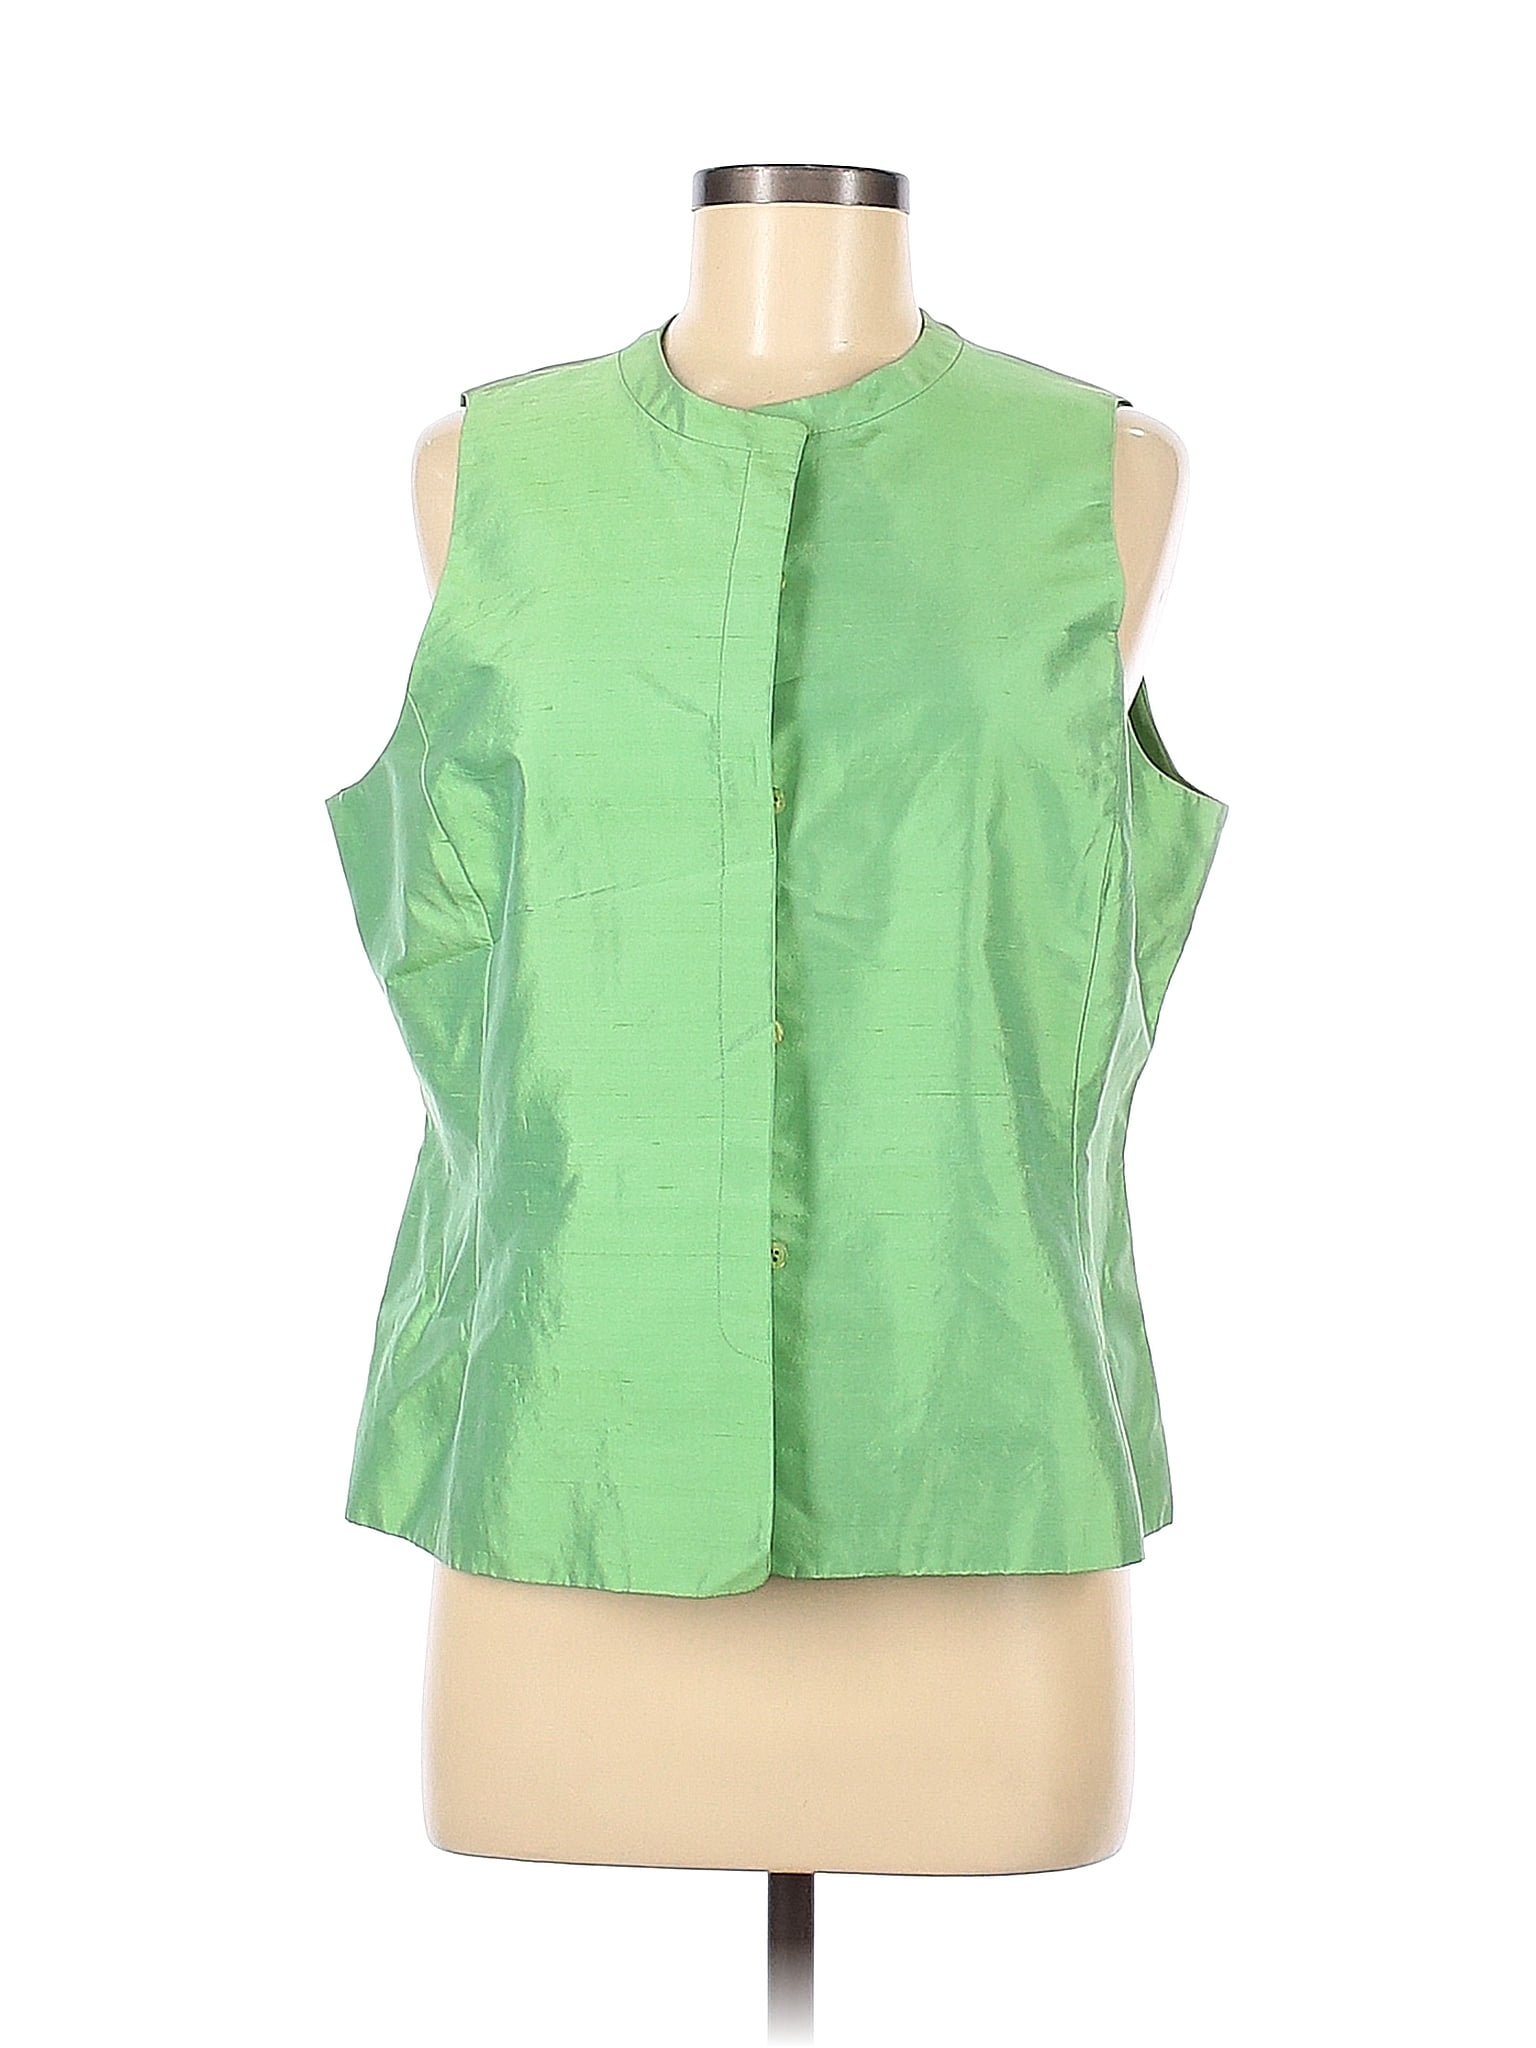 Jones New York 100% Silk Green Vest Size 14 - 75% off | thredUP